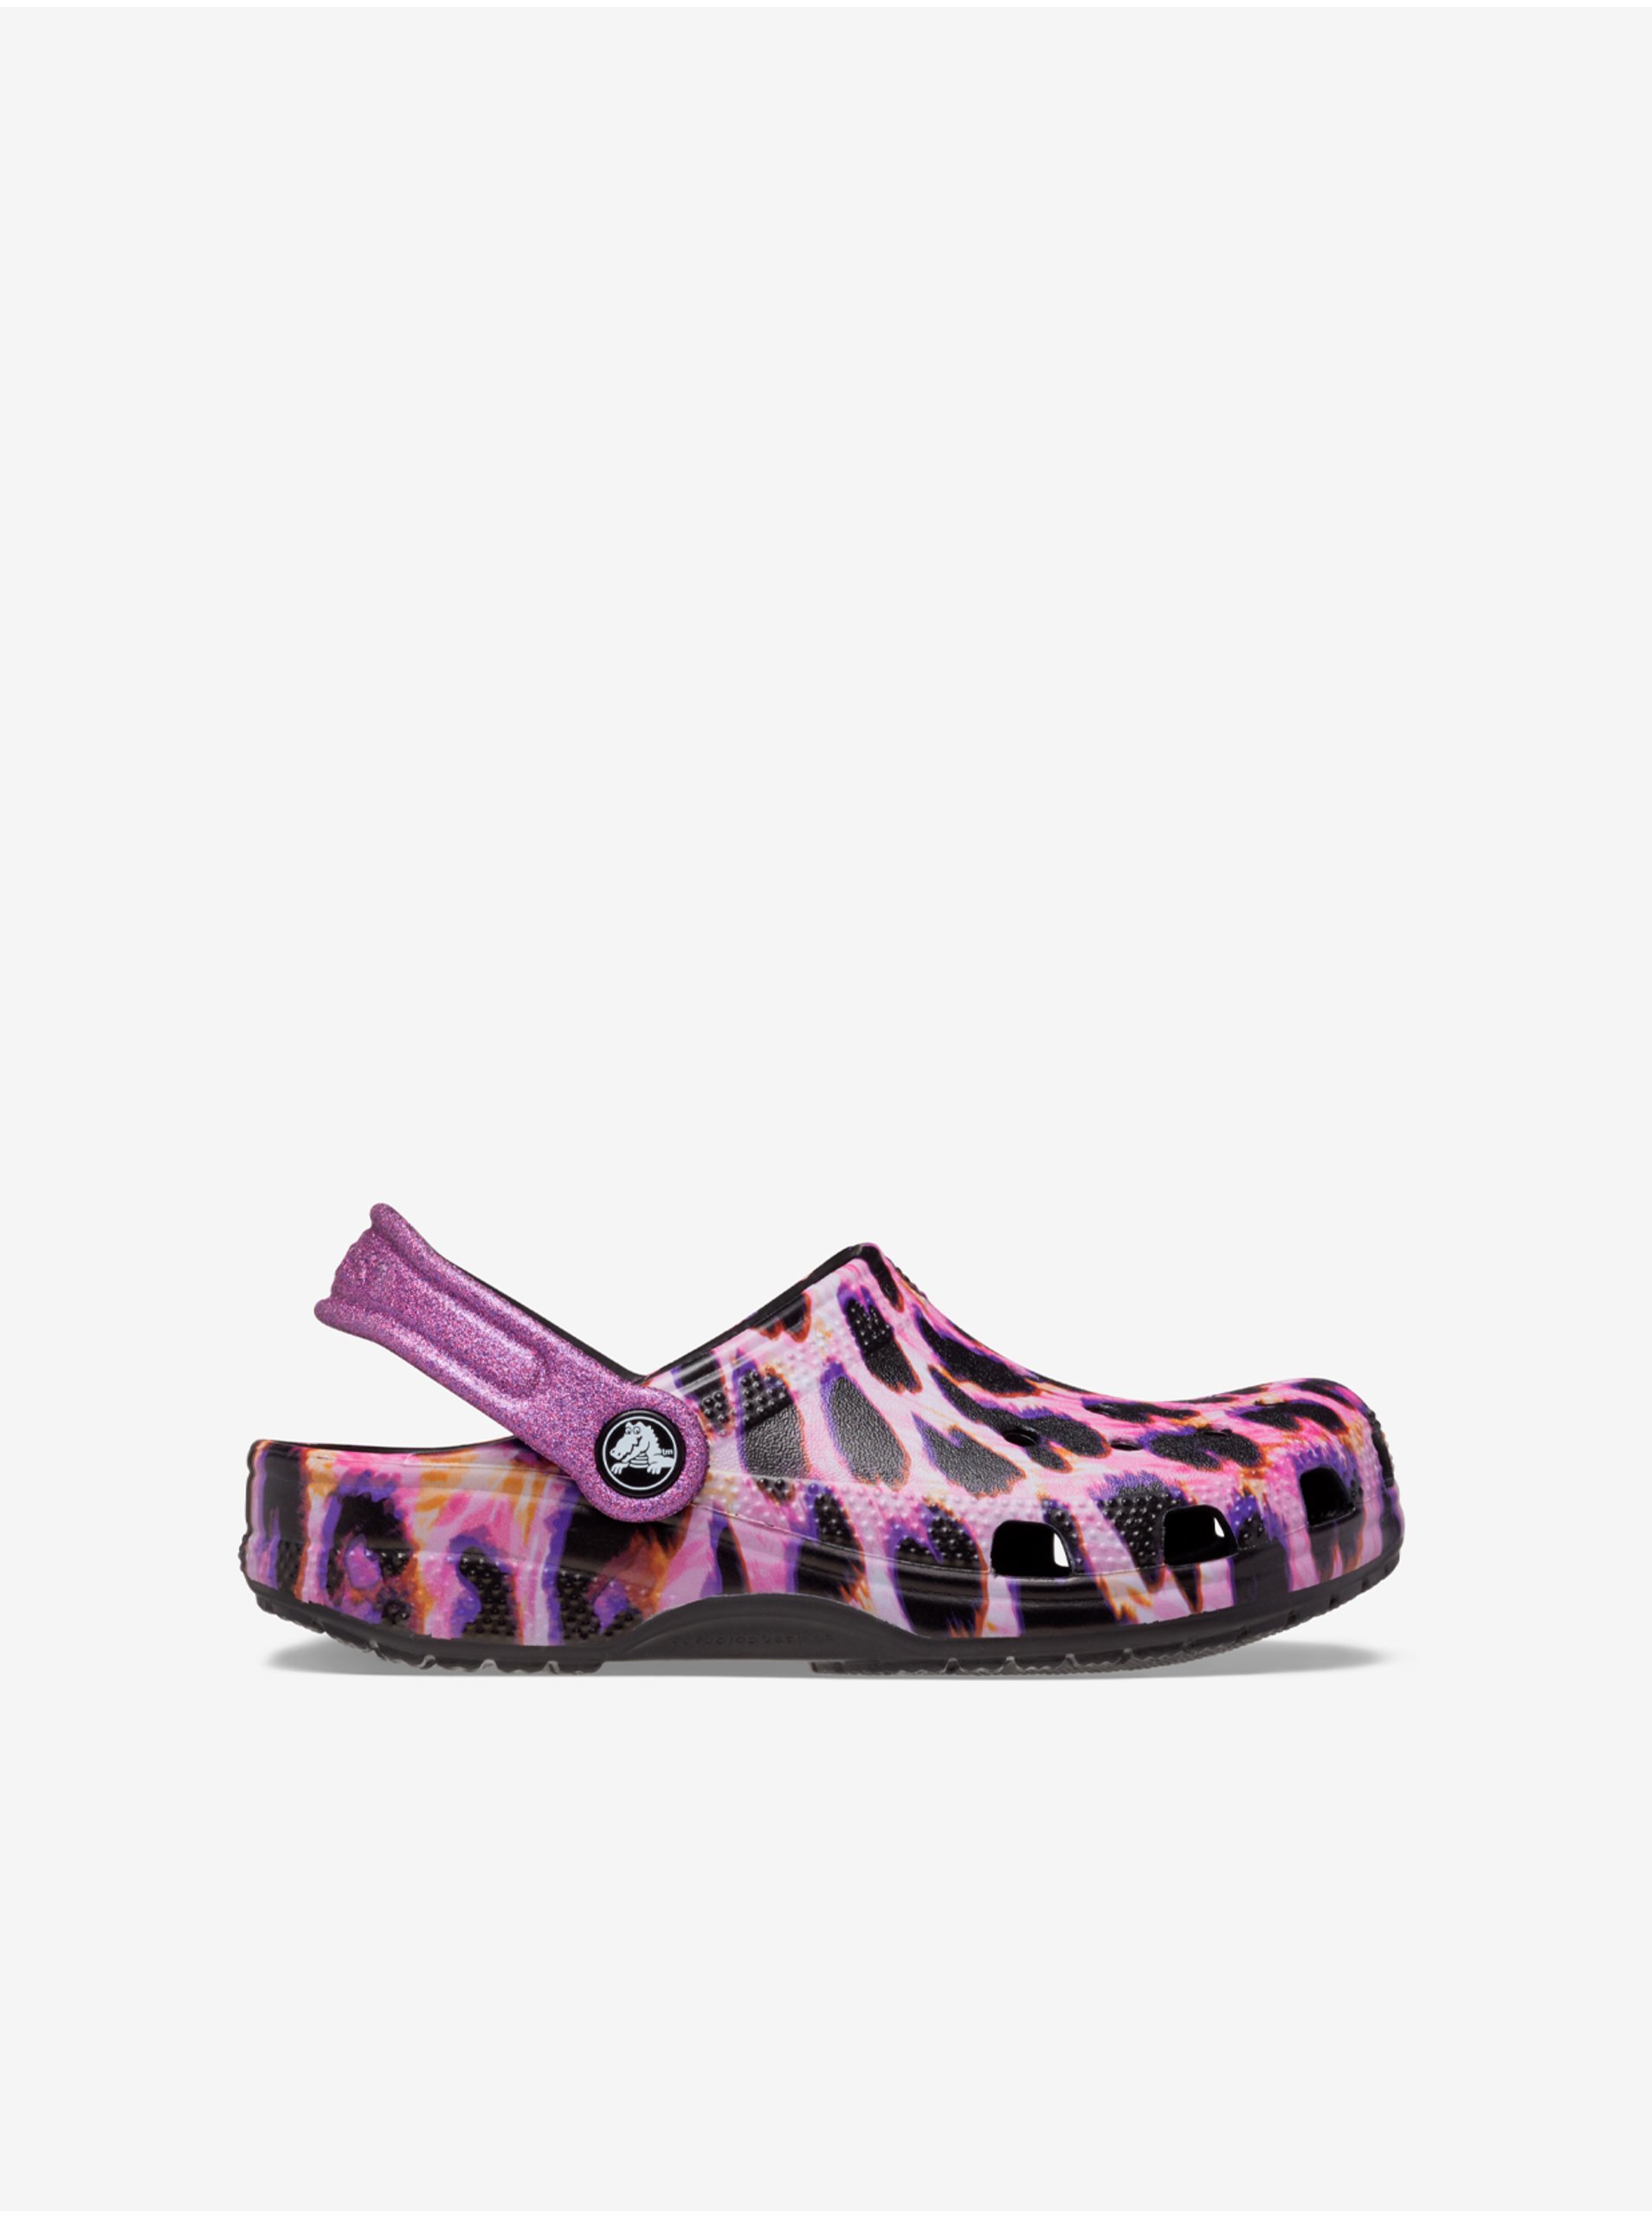 Purple Girls' Slippers with Animal Pattern Crocs - Girls